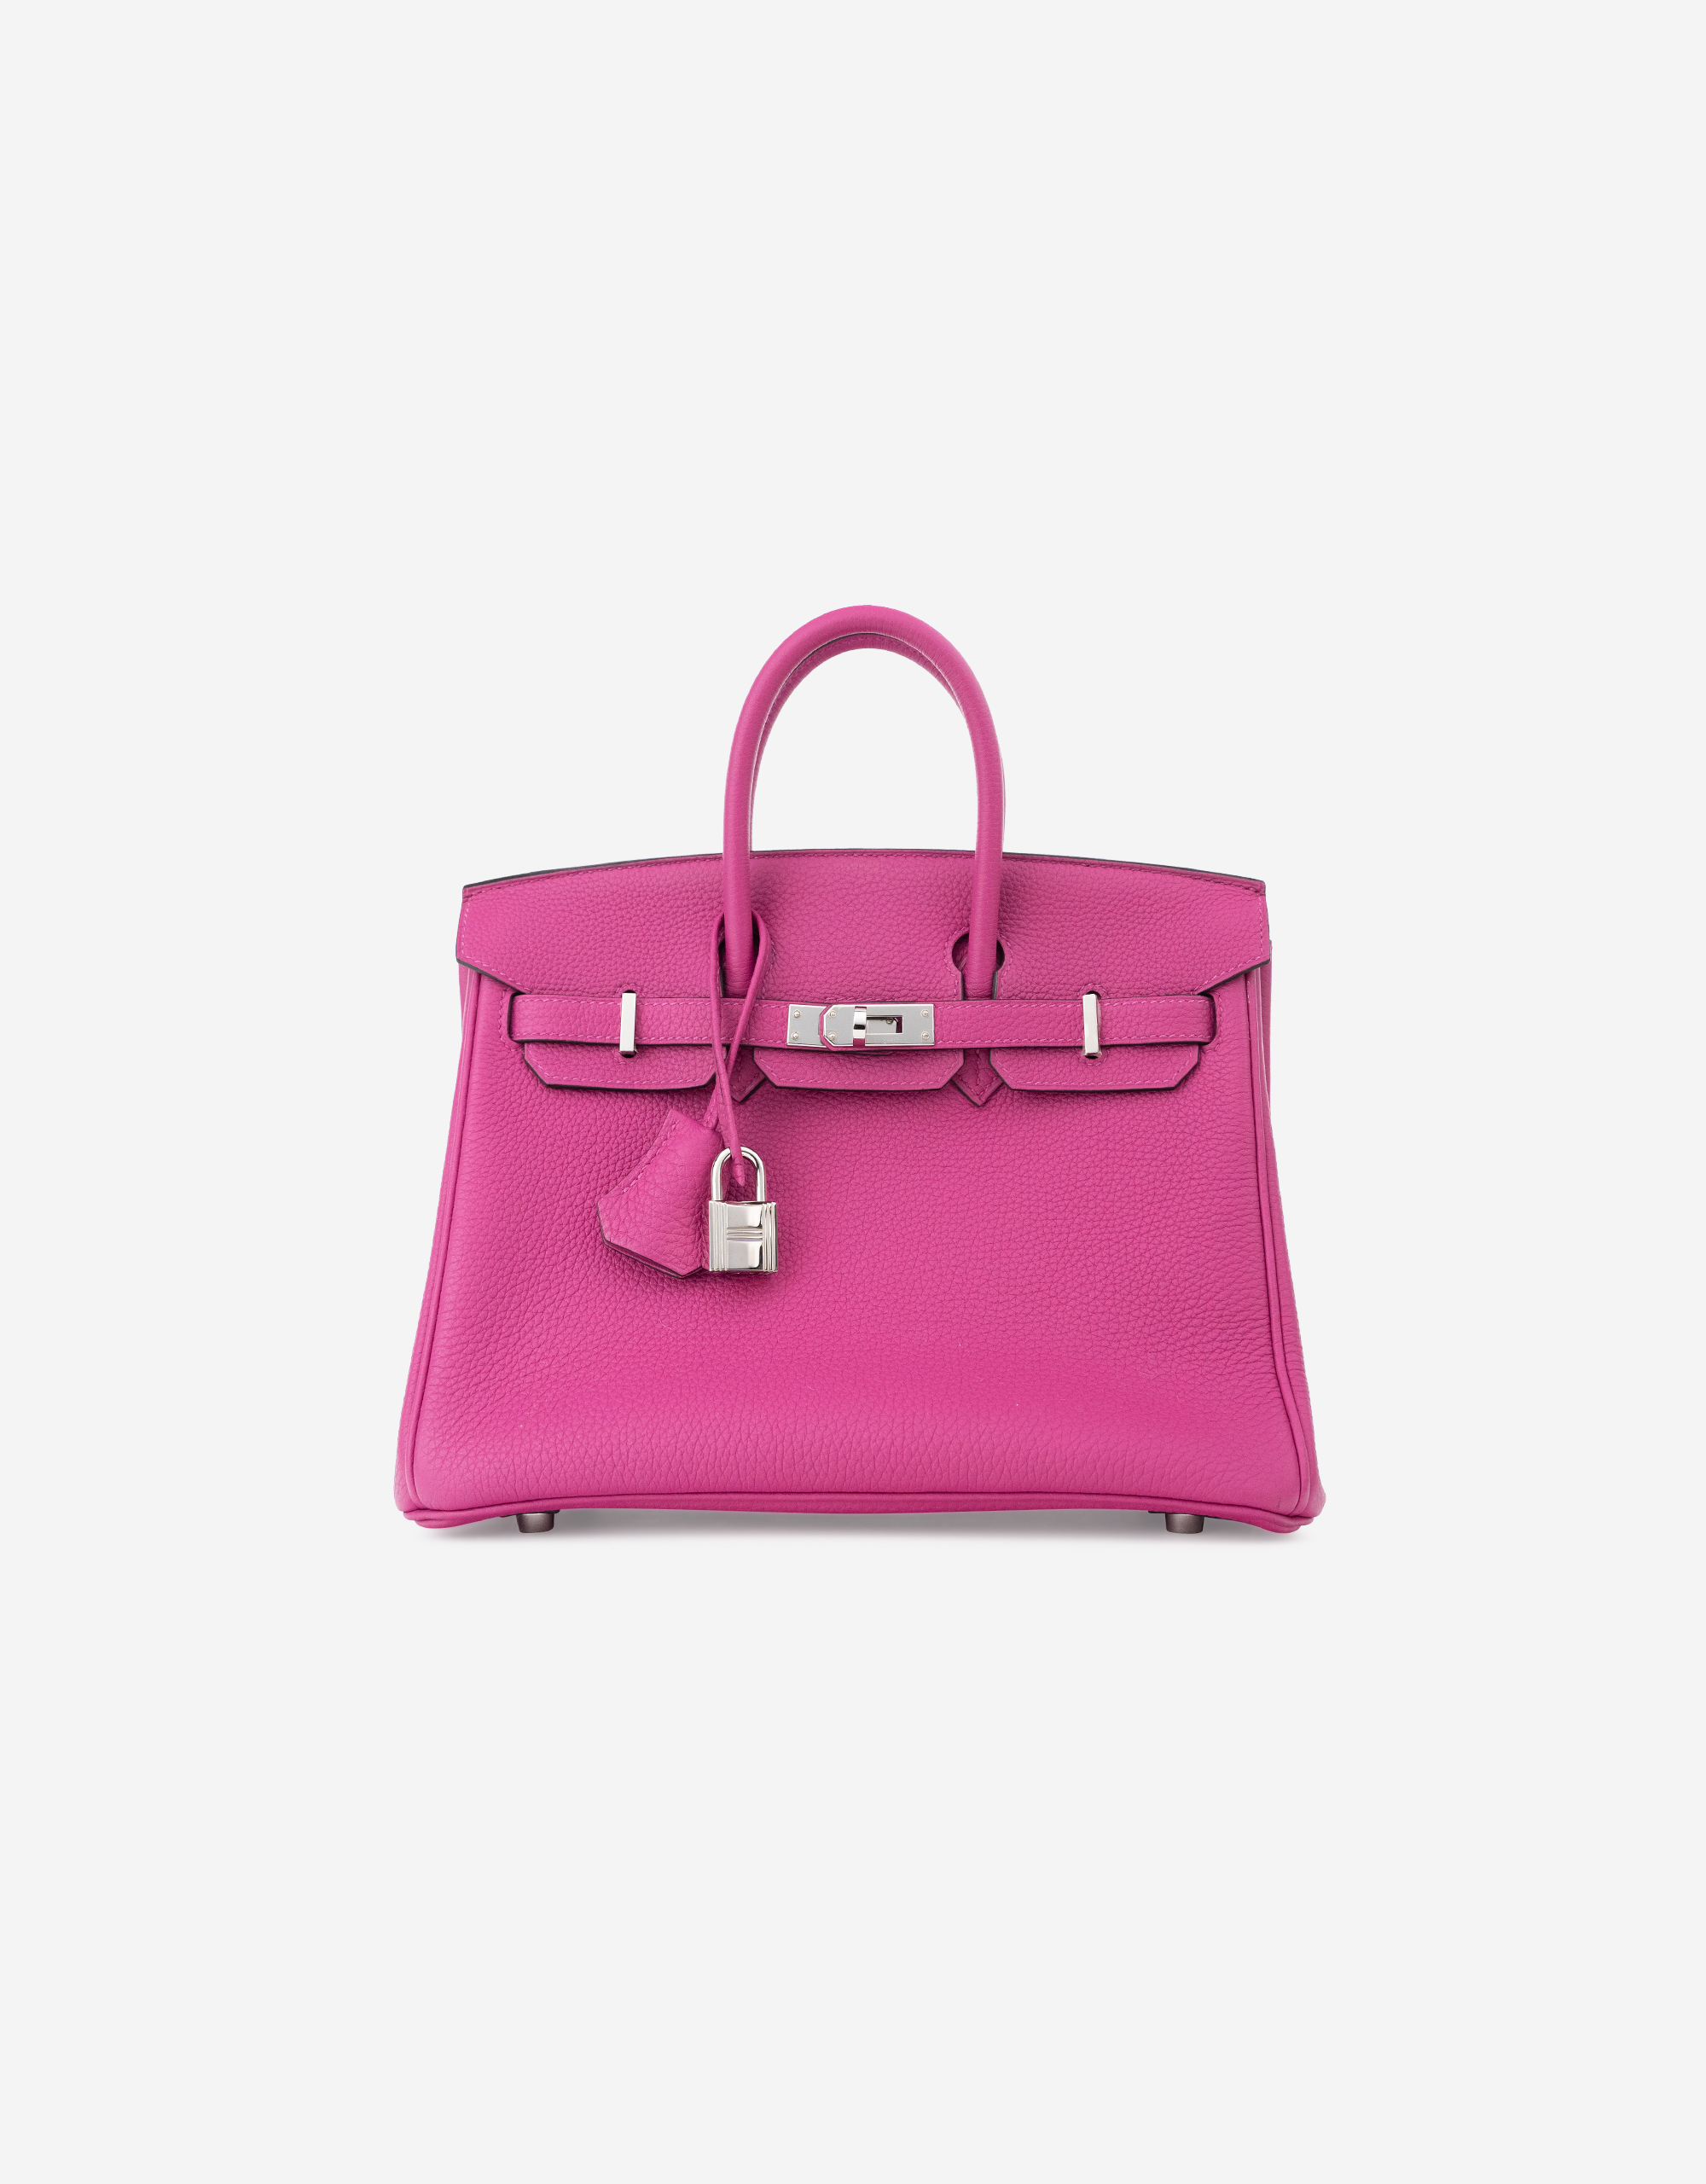 Hermès Birkin 25 Togo Rose Pourpre | SACLÀB